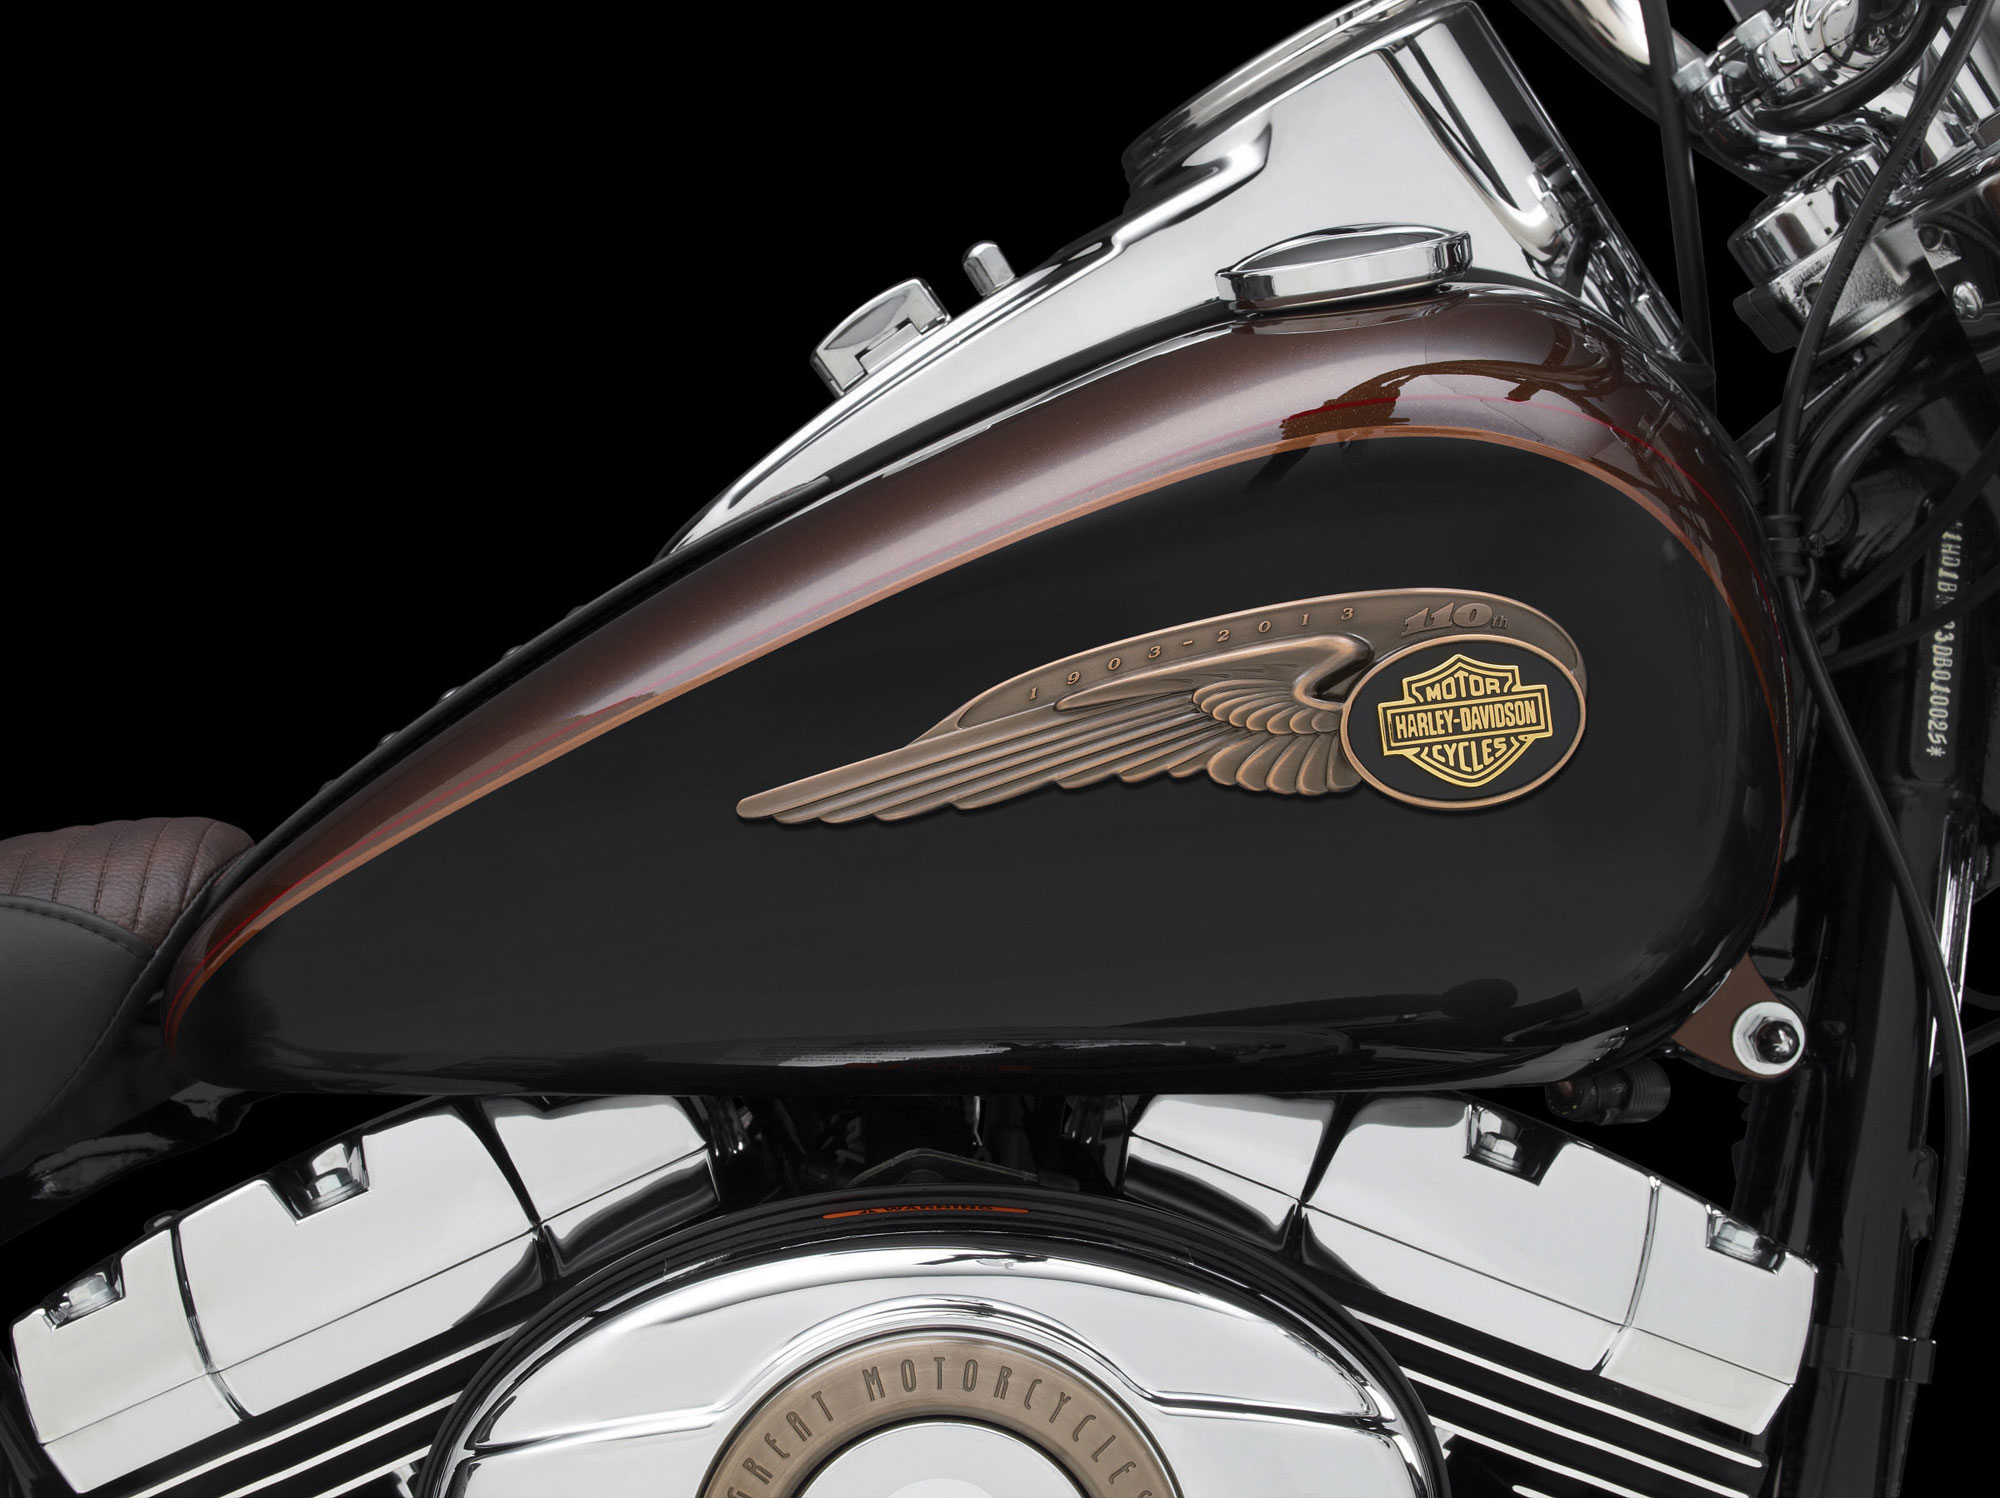 2013 Harley Davidson Flstc Heritage Softail Classic 110th Anniversary Review